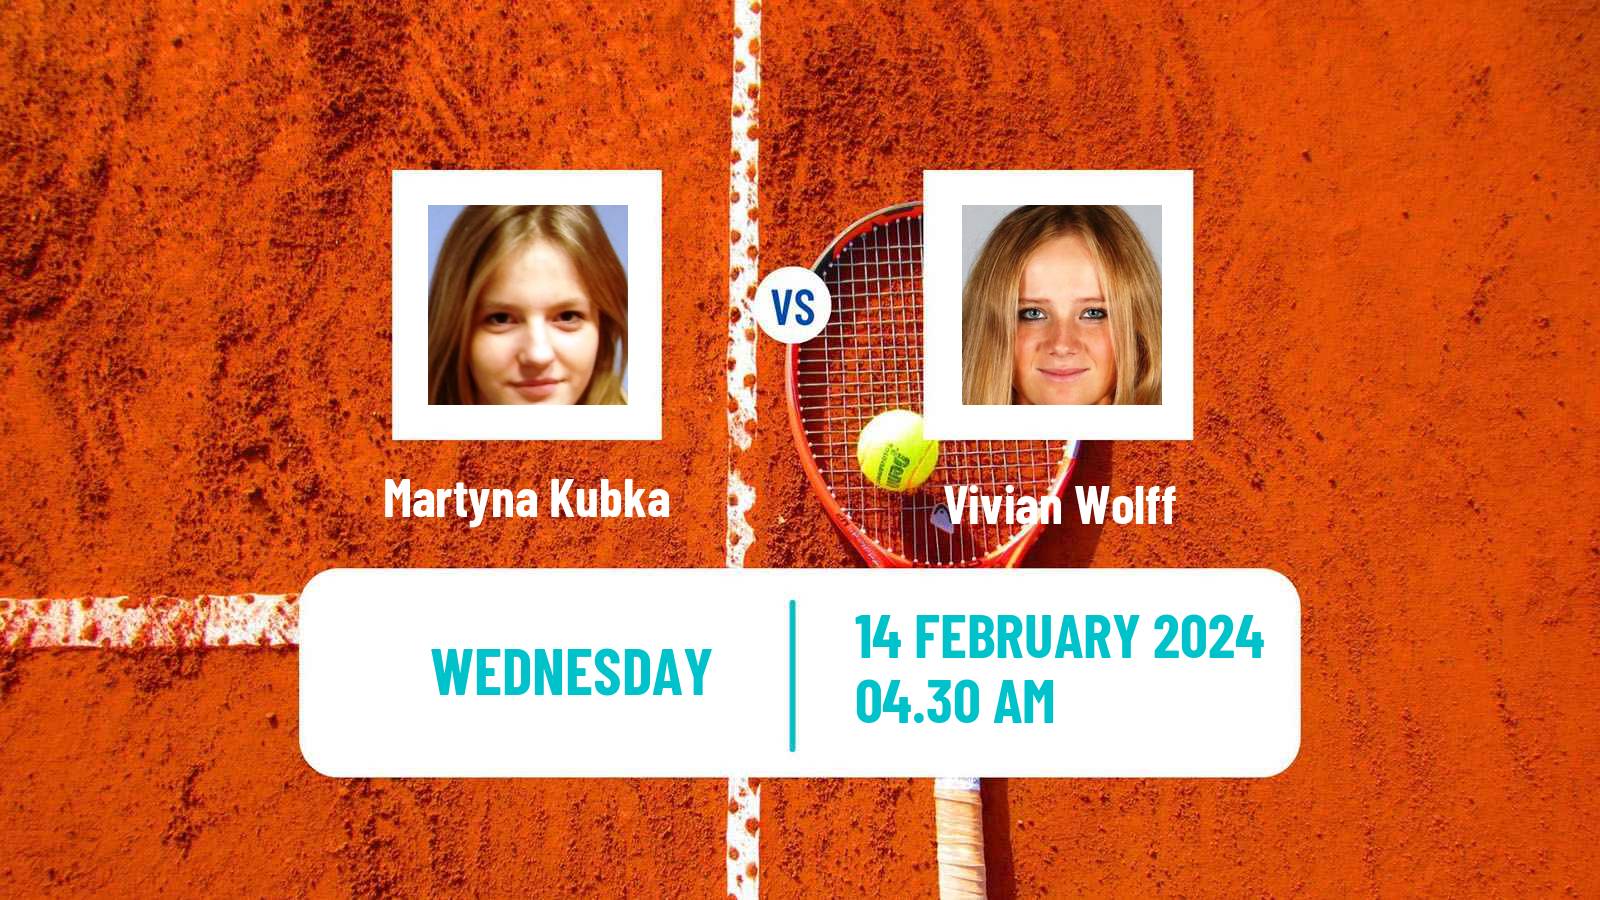 Tennis ITF W75 Altenkirchen Women Martyna Kubka - Vivian Wolff